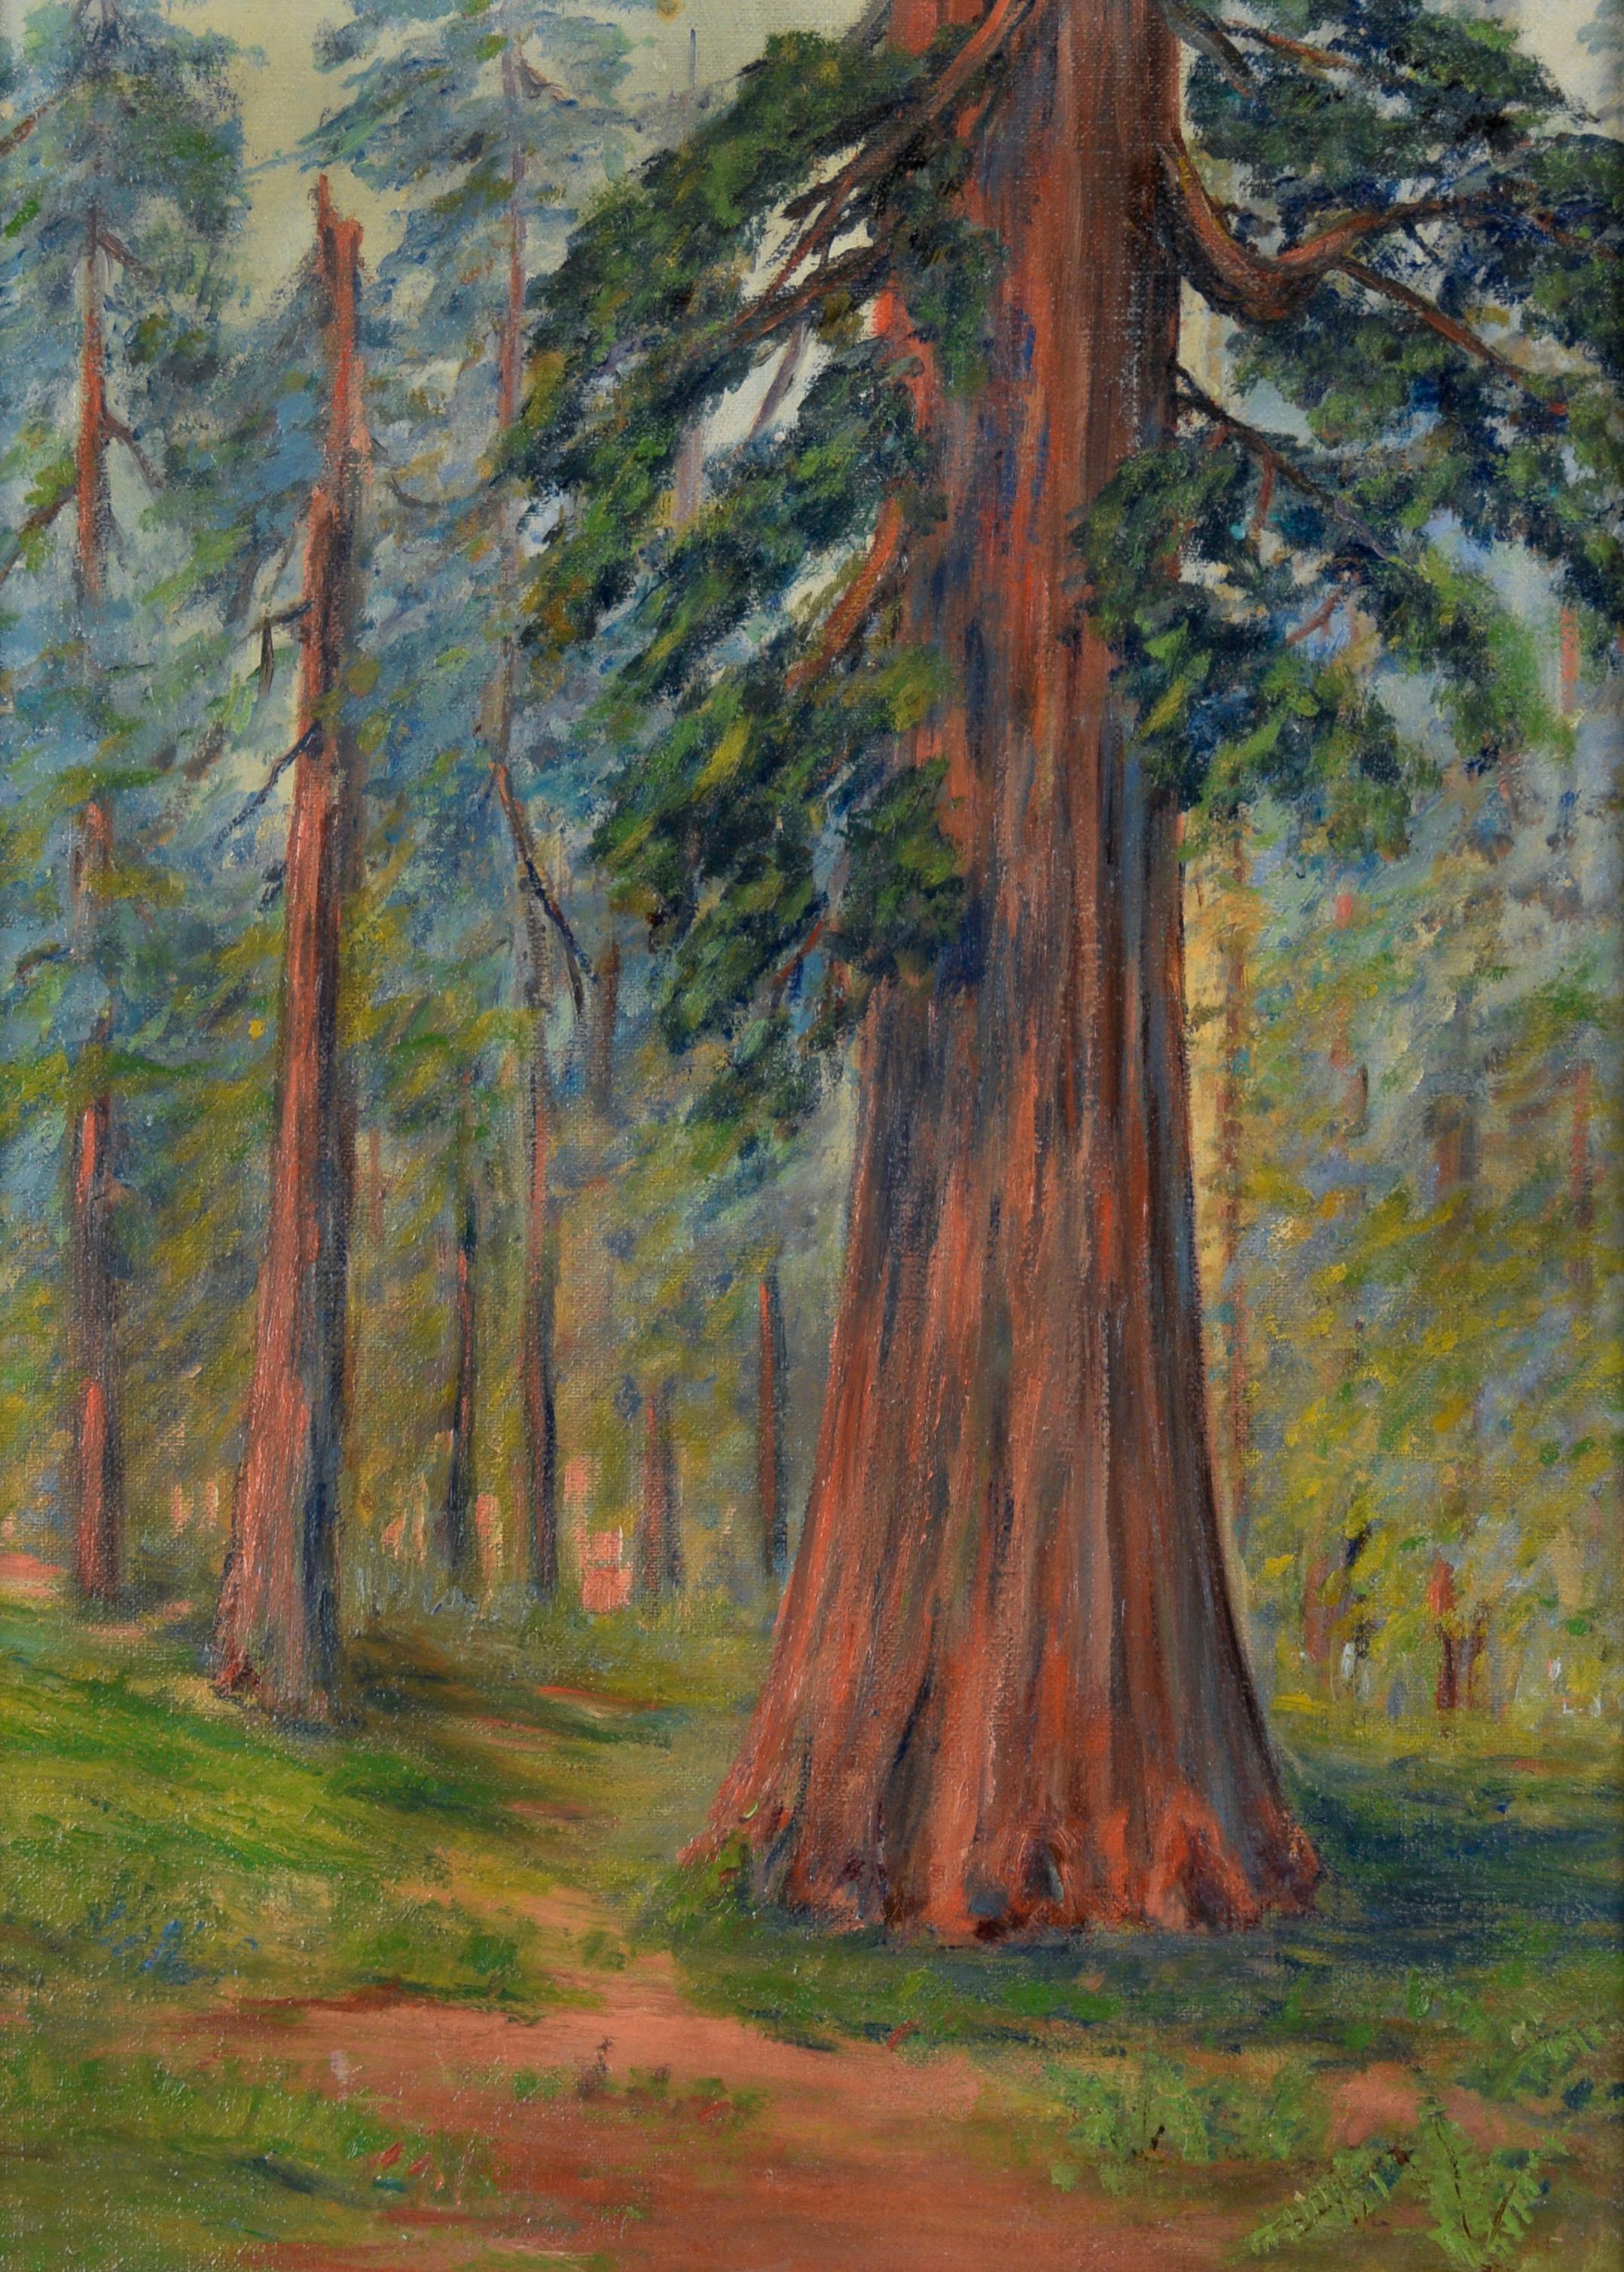 Through The Redwoods – California Impressionismus ca. 1930er Jahre (Amerikanischer Impressionismus), Painting, von California School